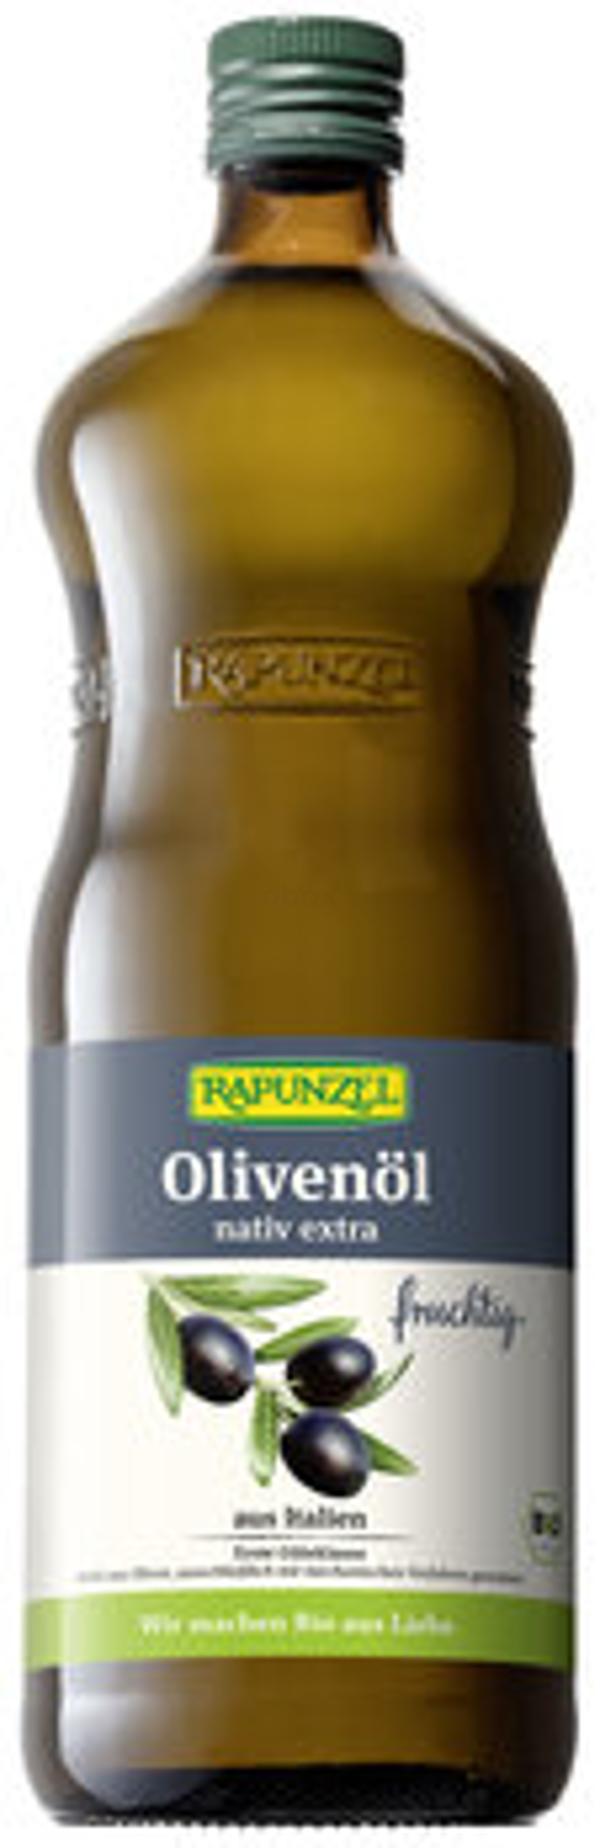 Produktfoto zu Olivenöl 1l